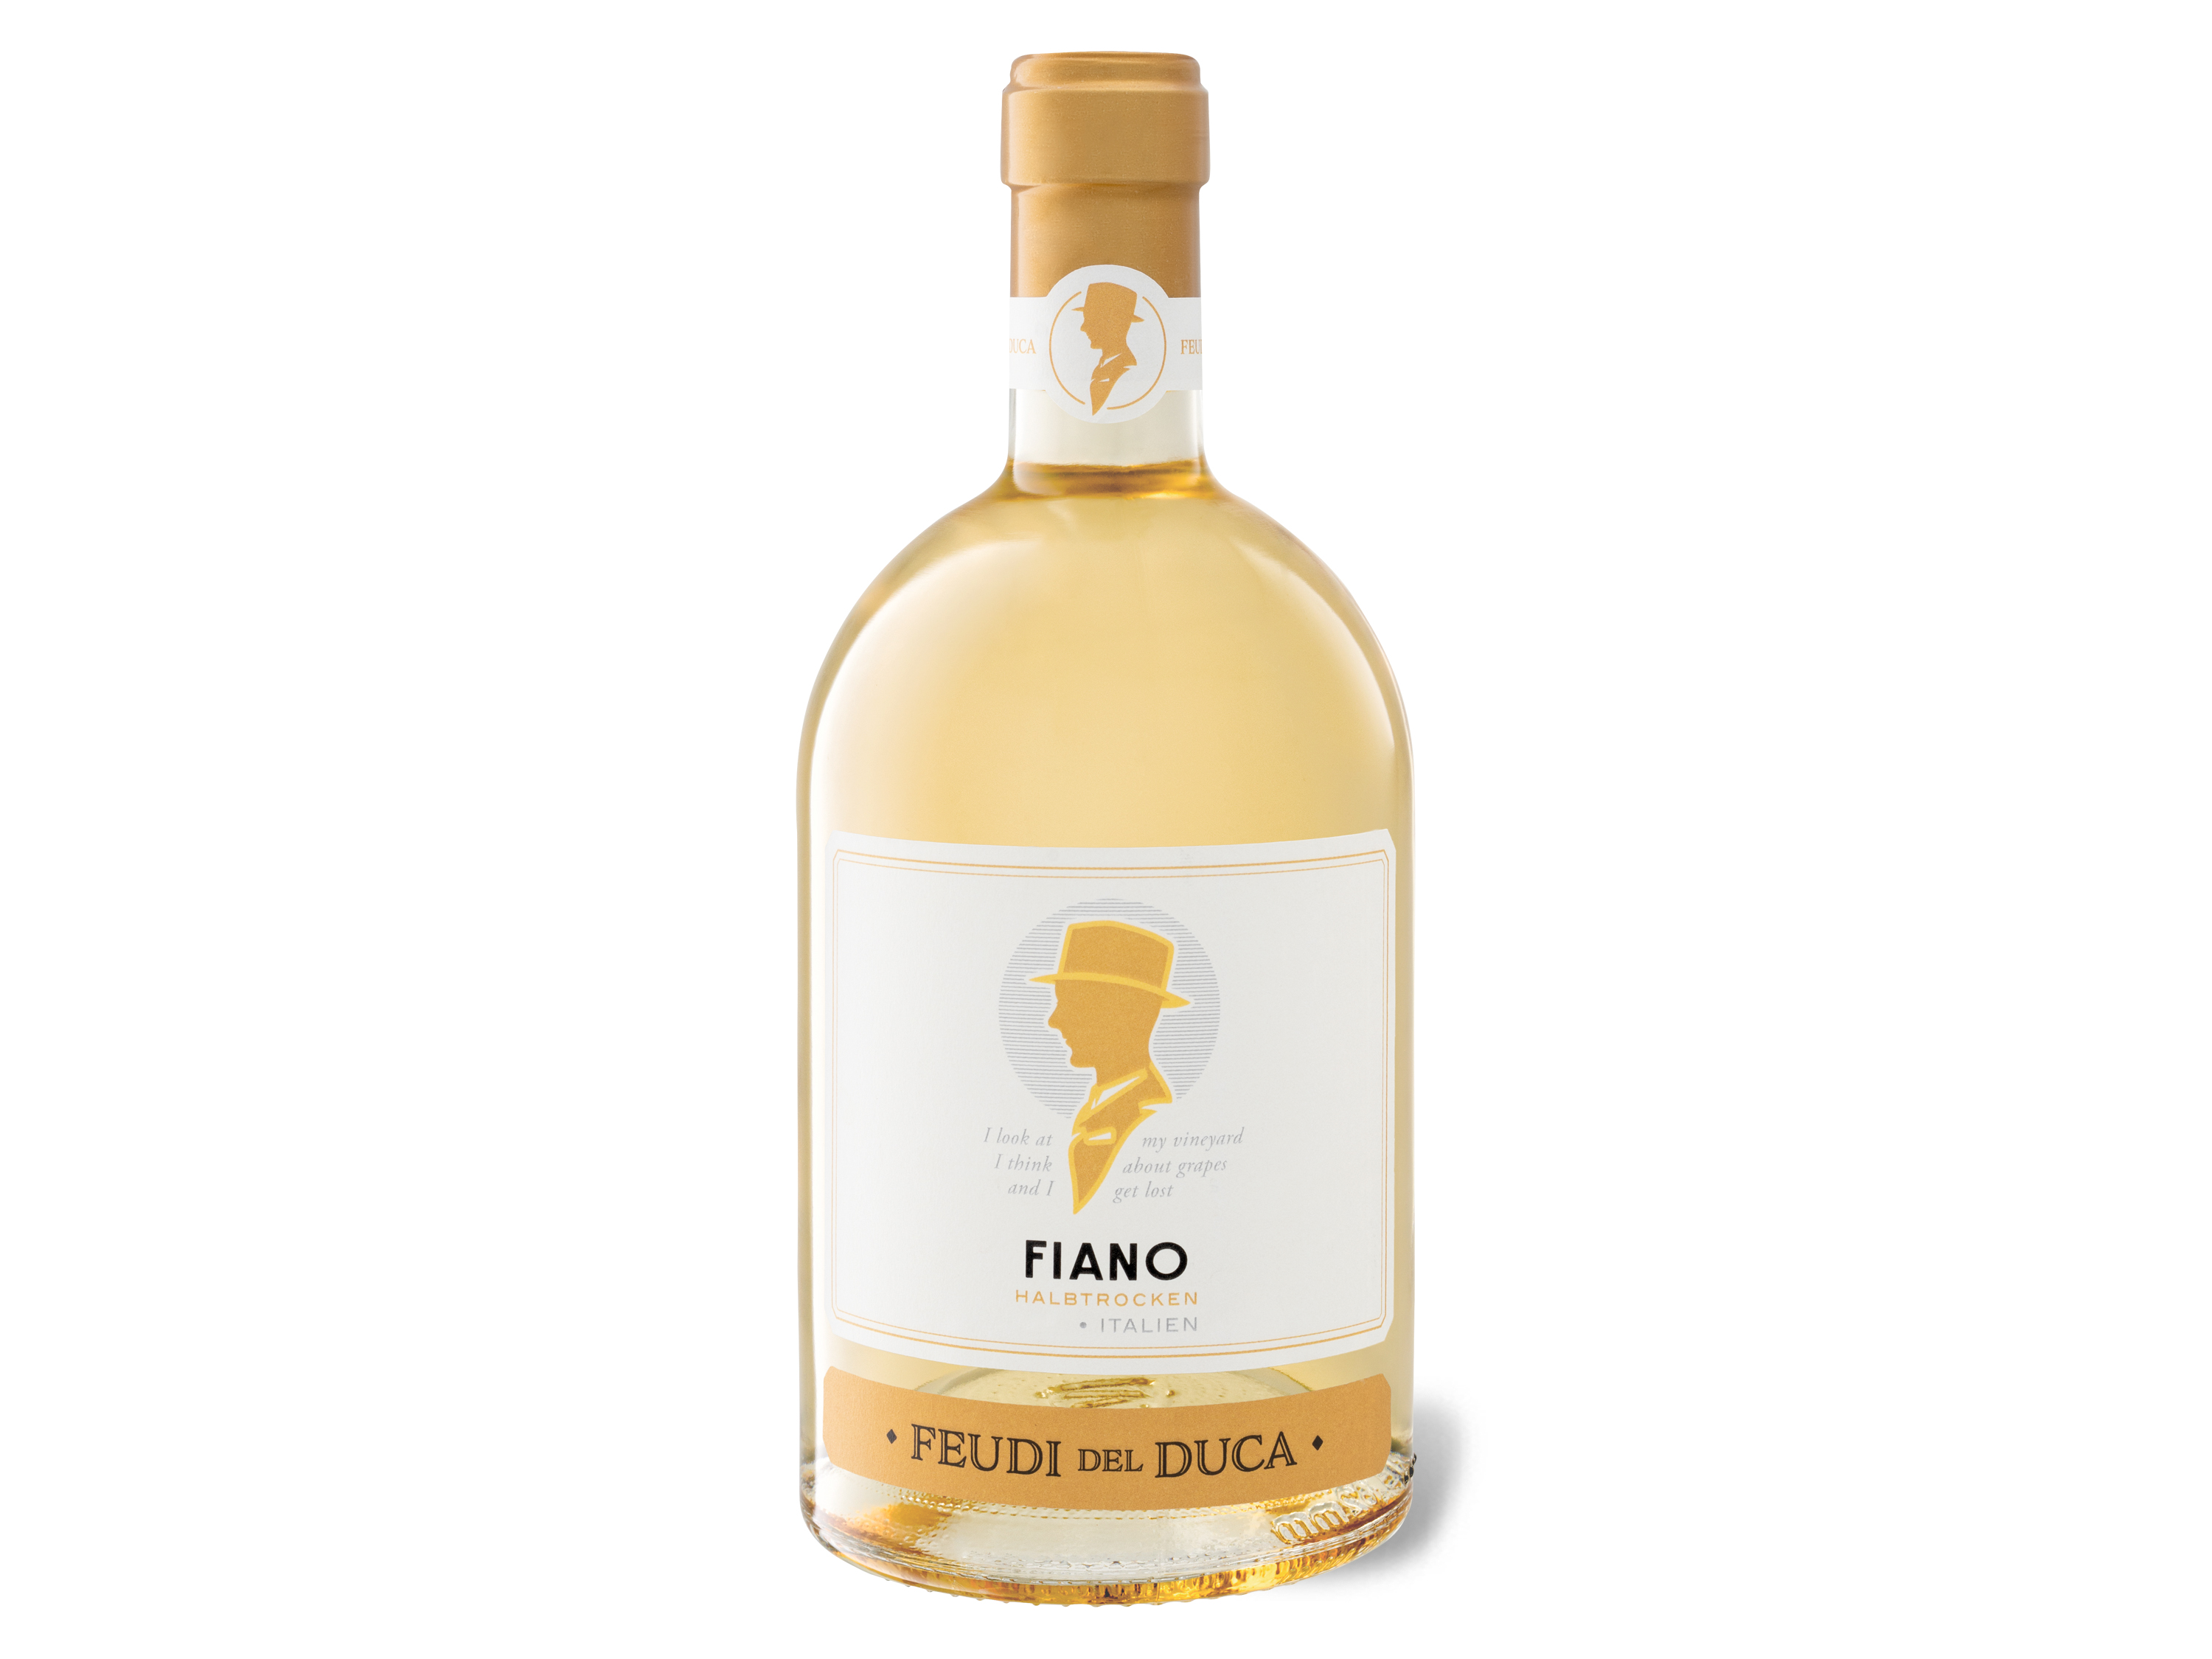 Feudi del Duca Fiano Puglia IGP halbtrocken, Weißwein 2021 Wein & Spirituosen Lidl DE